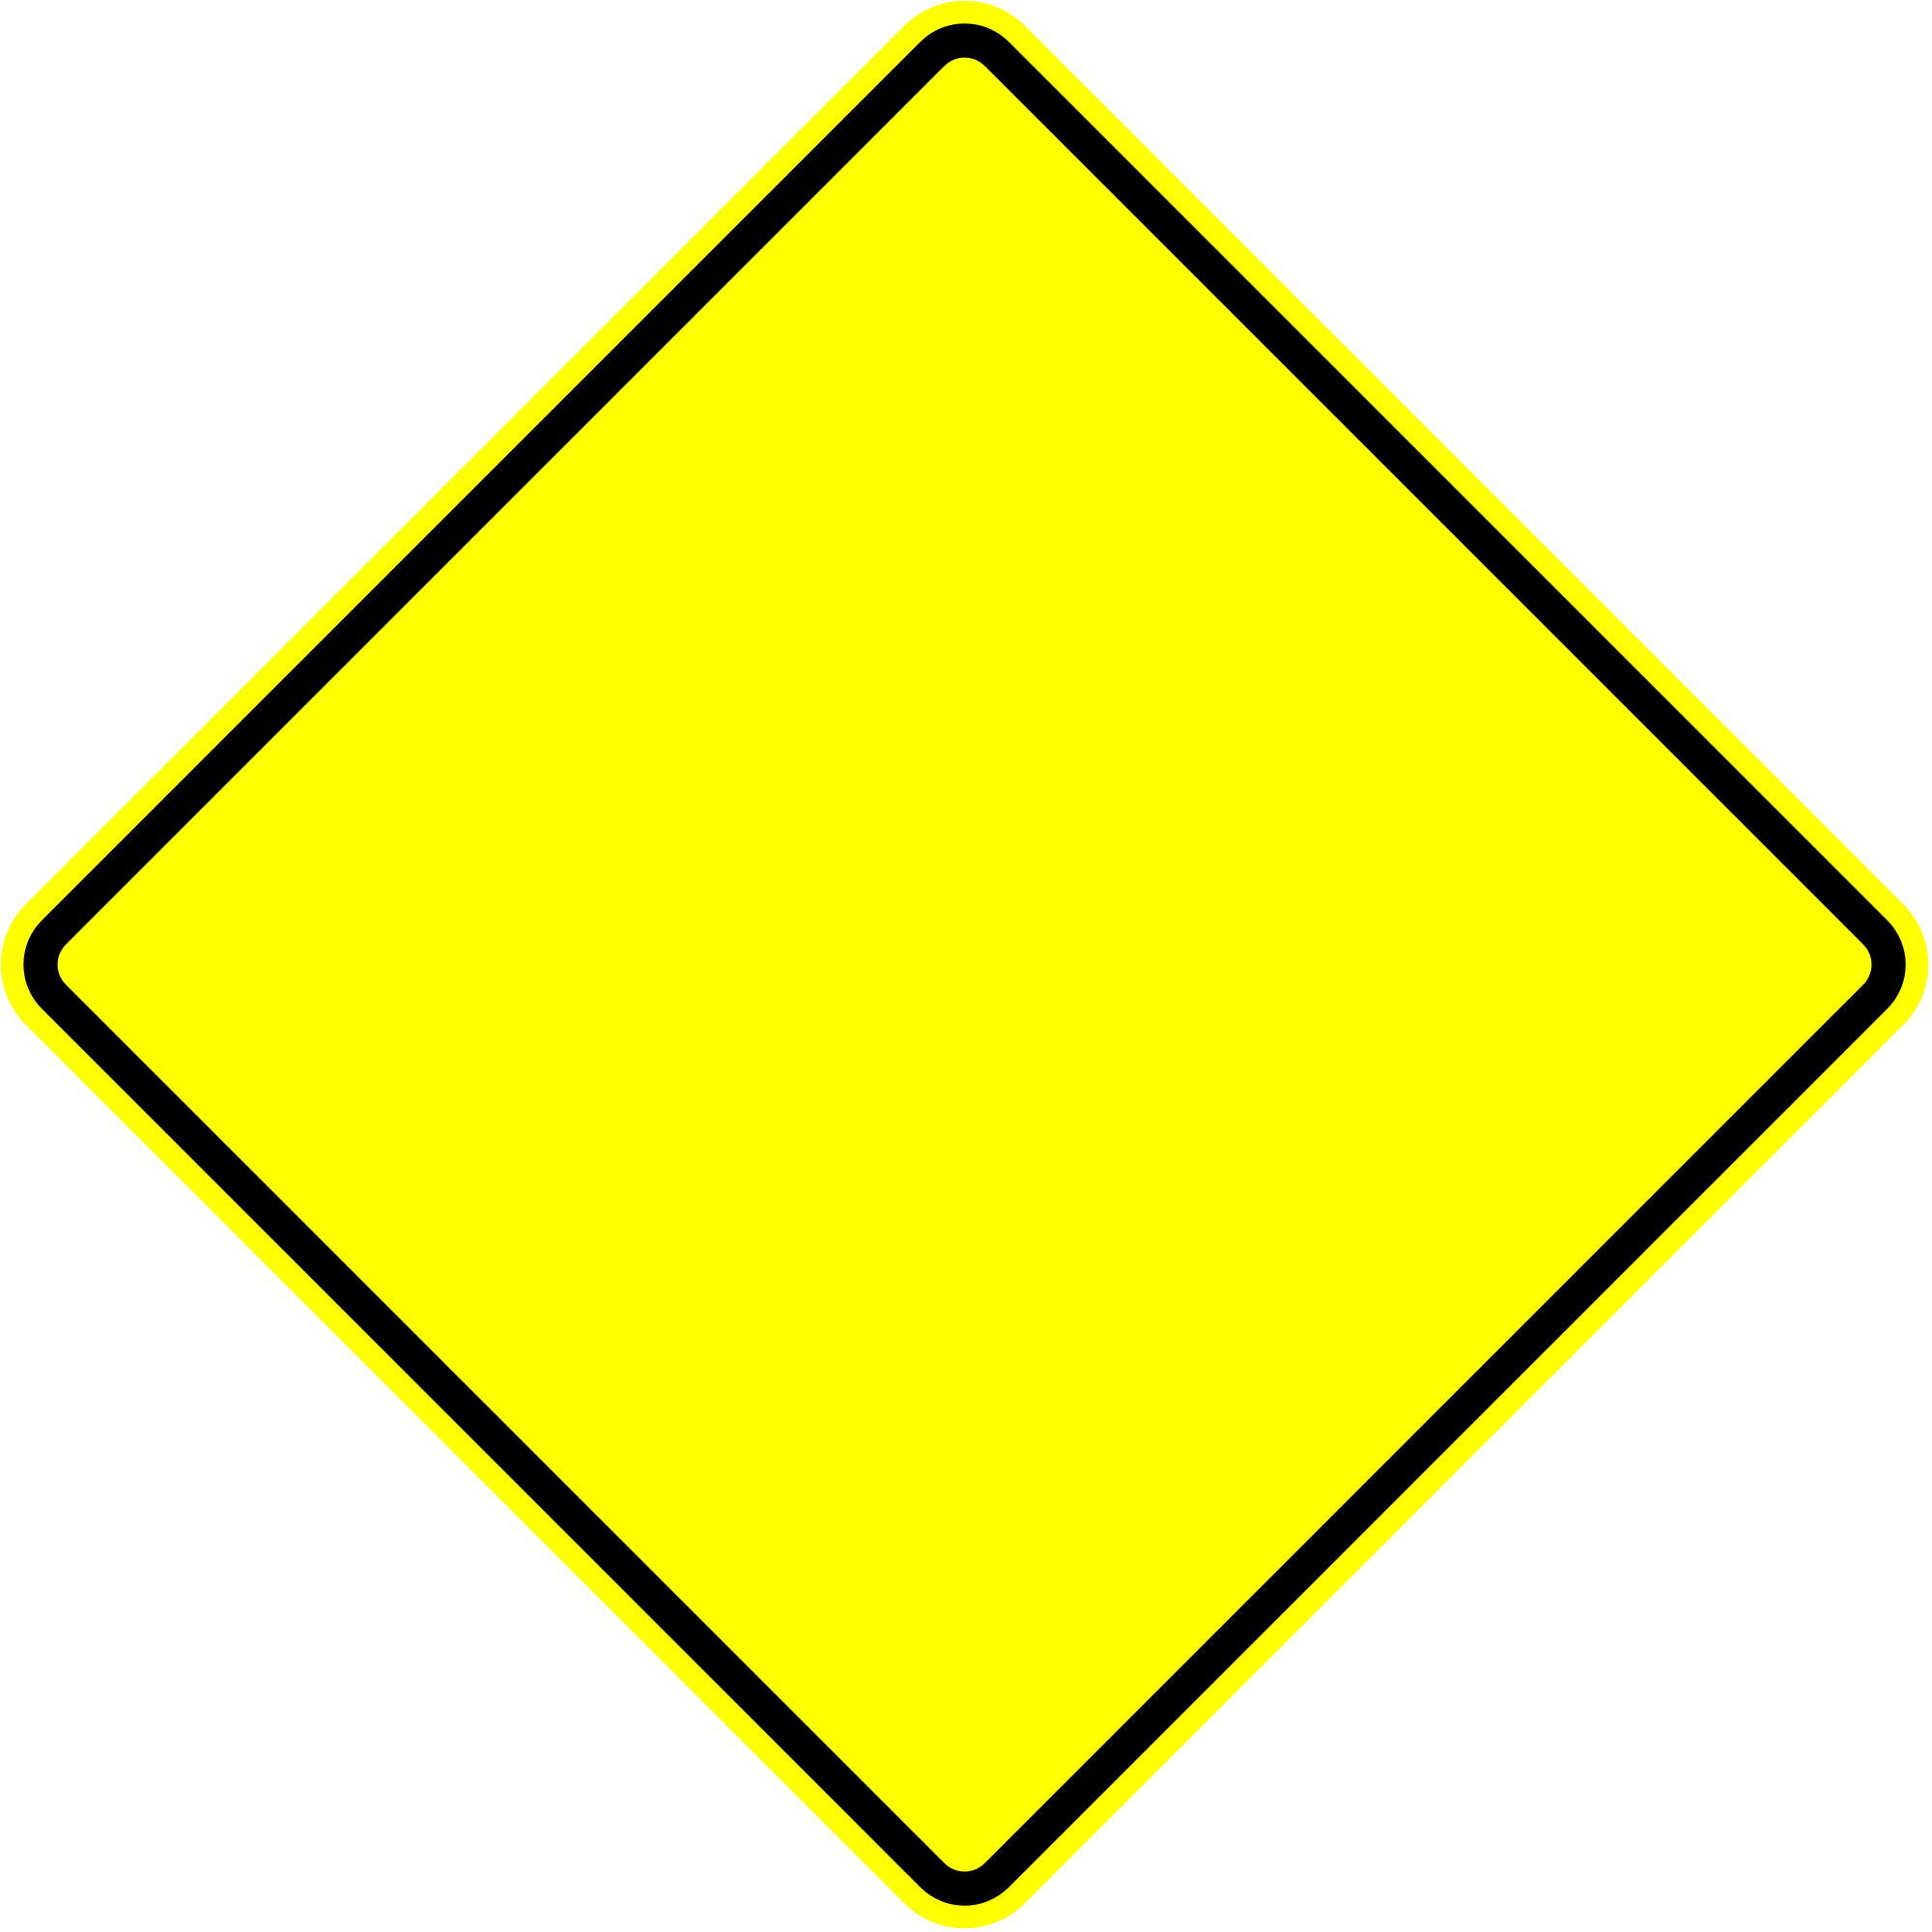 File:Diamond warning sign (fluorescent yellow).svg - Wikimedia Commons